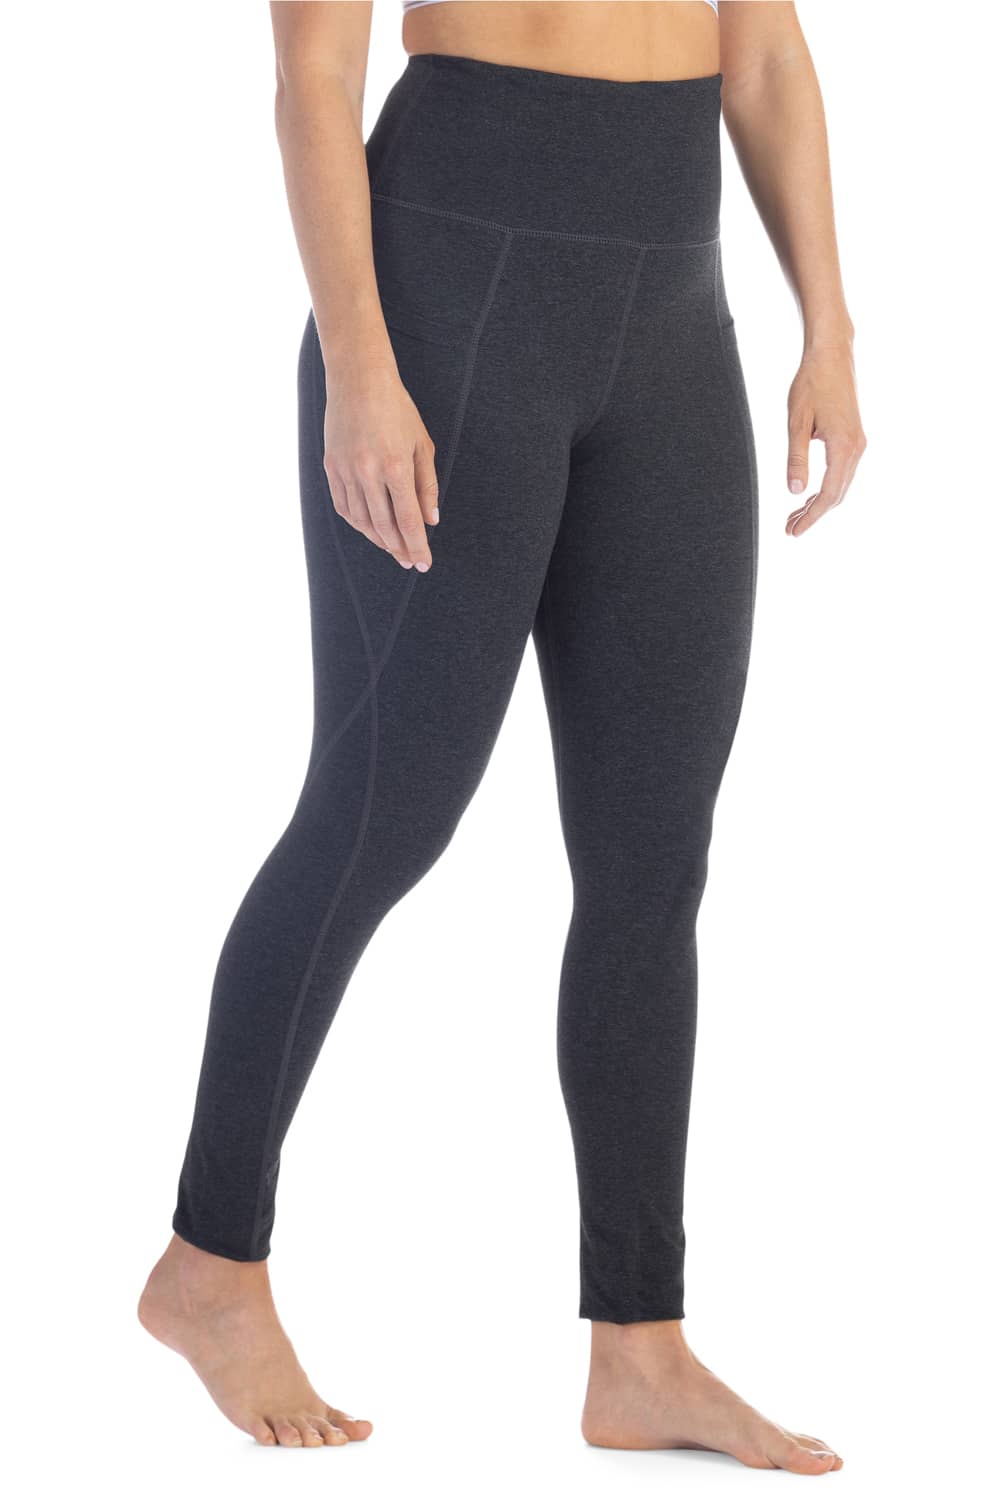 CFR Women Capris Workout Leggings High Waist Scrunch Butt Peach Booty Push  up Yoga Pants, D-silky Quality Black(side Pockets), M price in UAE | Amazon  UAE | kanbkam